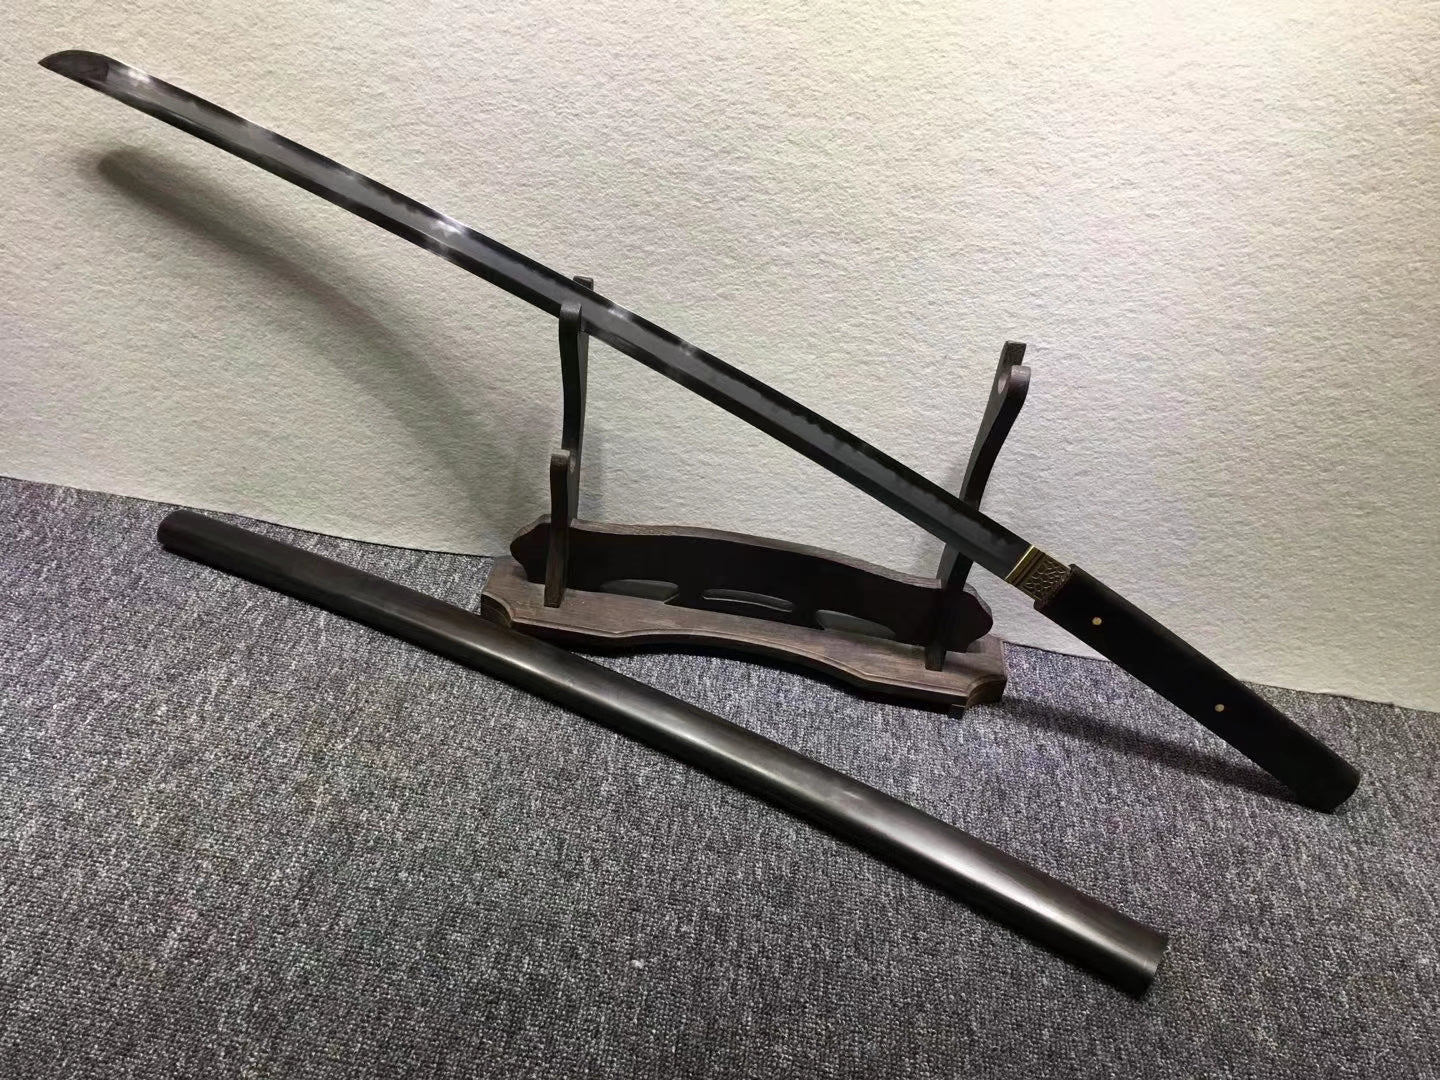 Samurai sword,Hand forged High carbon steel blade,Ebony scabbard - Chinese sword shop